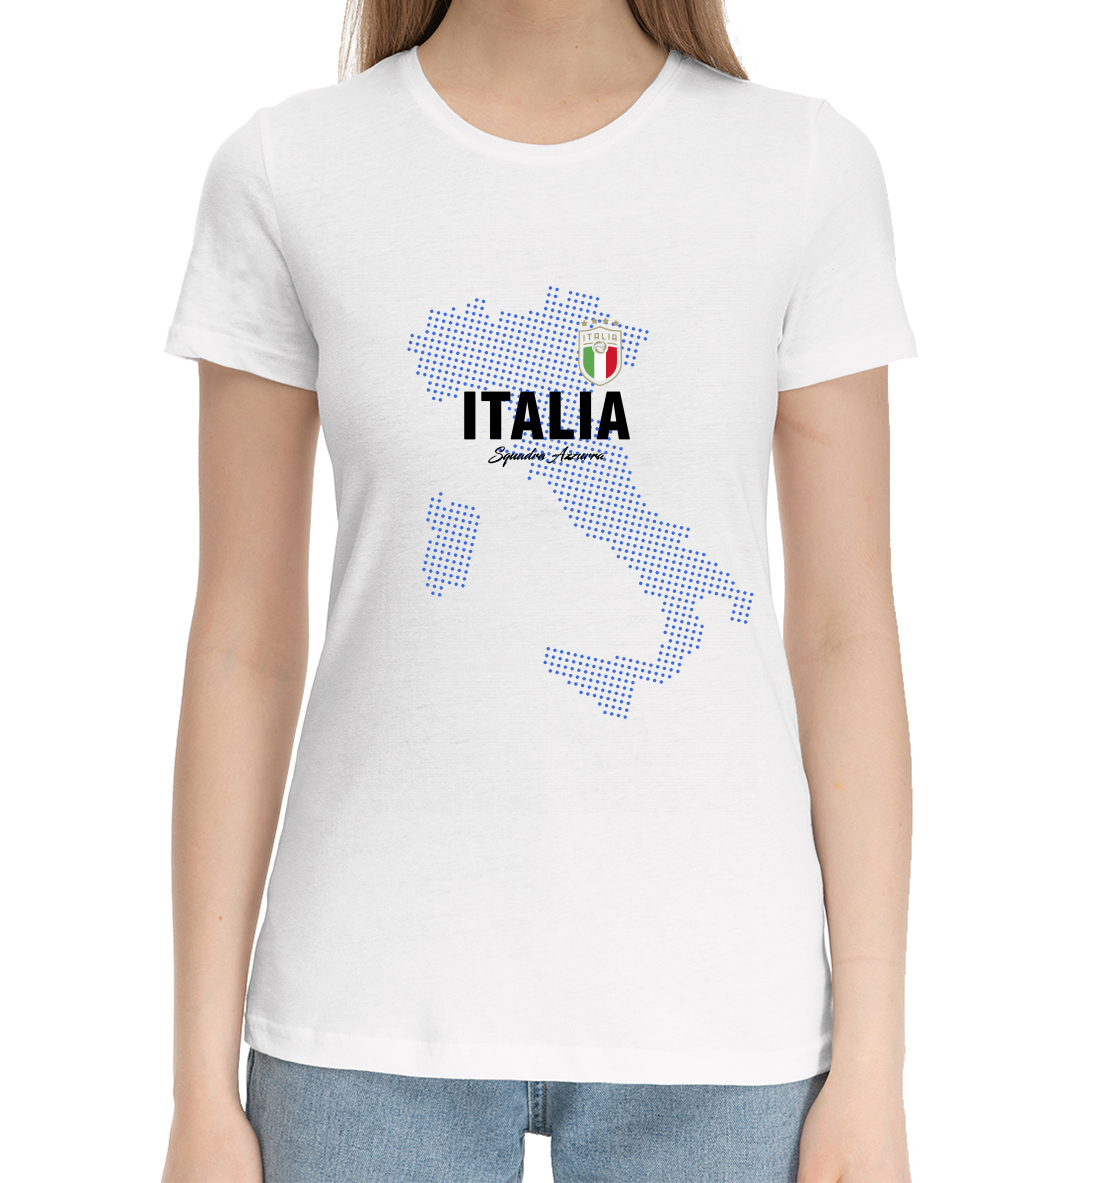 Женская Хлопковая футболка Италия, артикул FNS-186686-hfu-1mp